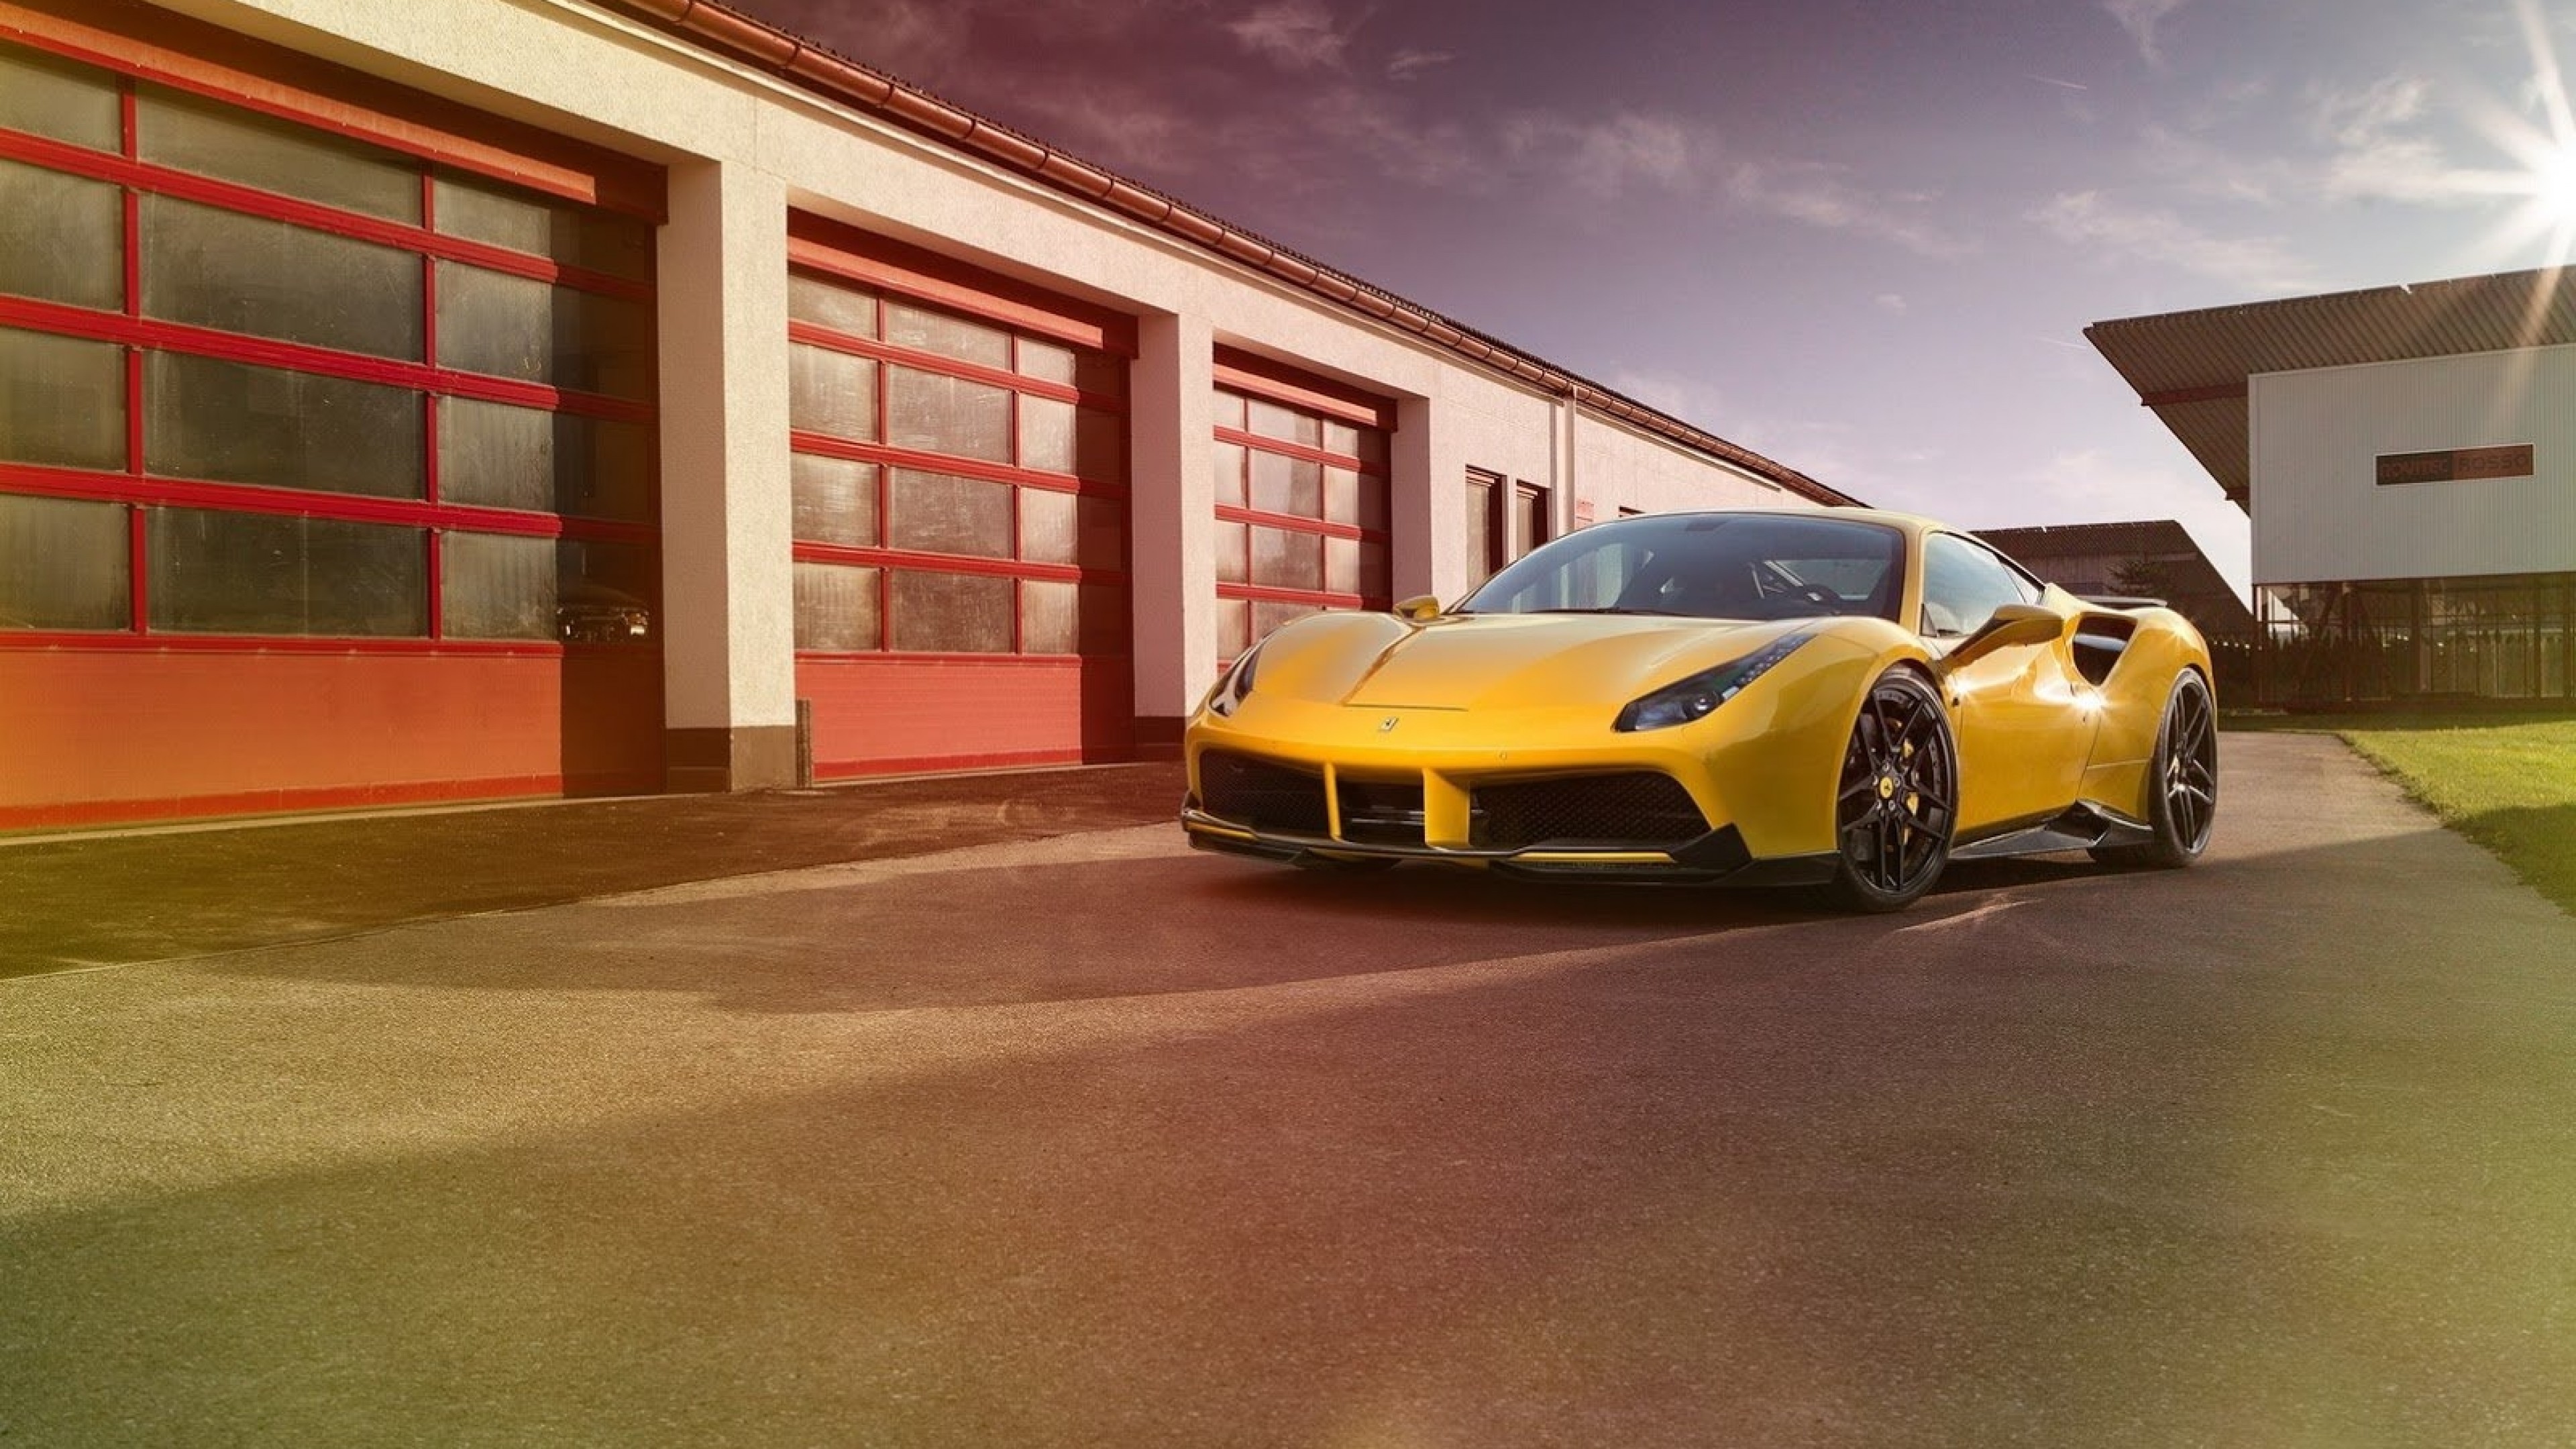 Download 3840x2160 Cars, Ferrari 488 Gtb, Yellow, Garage Wallpaper